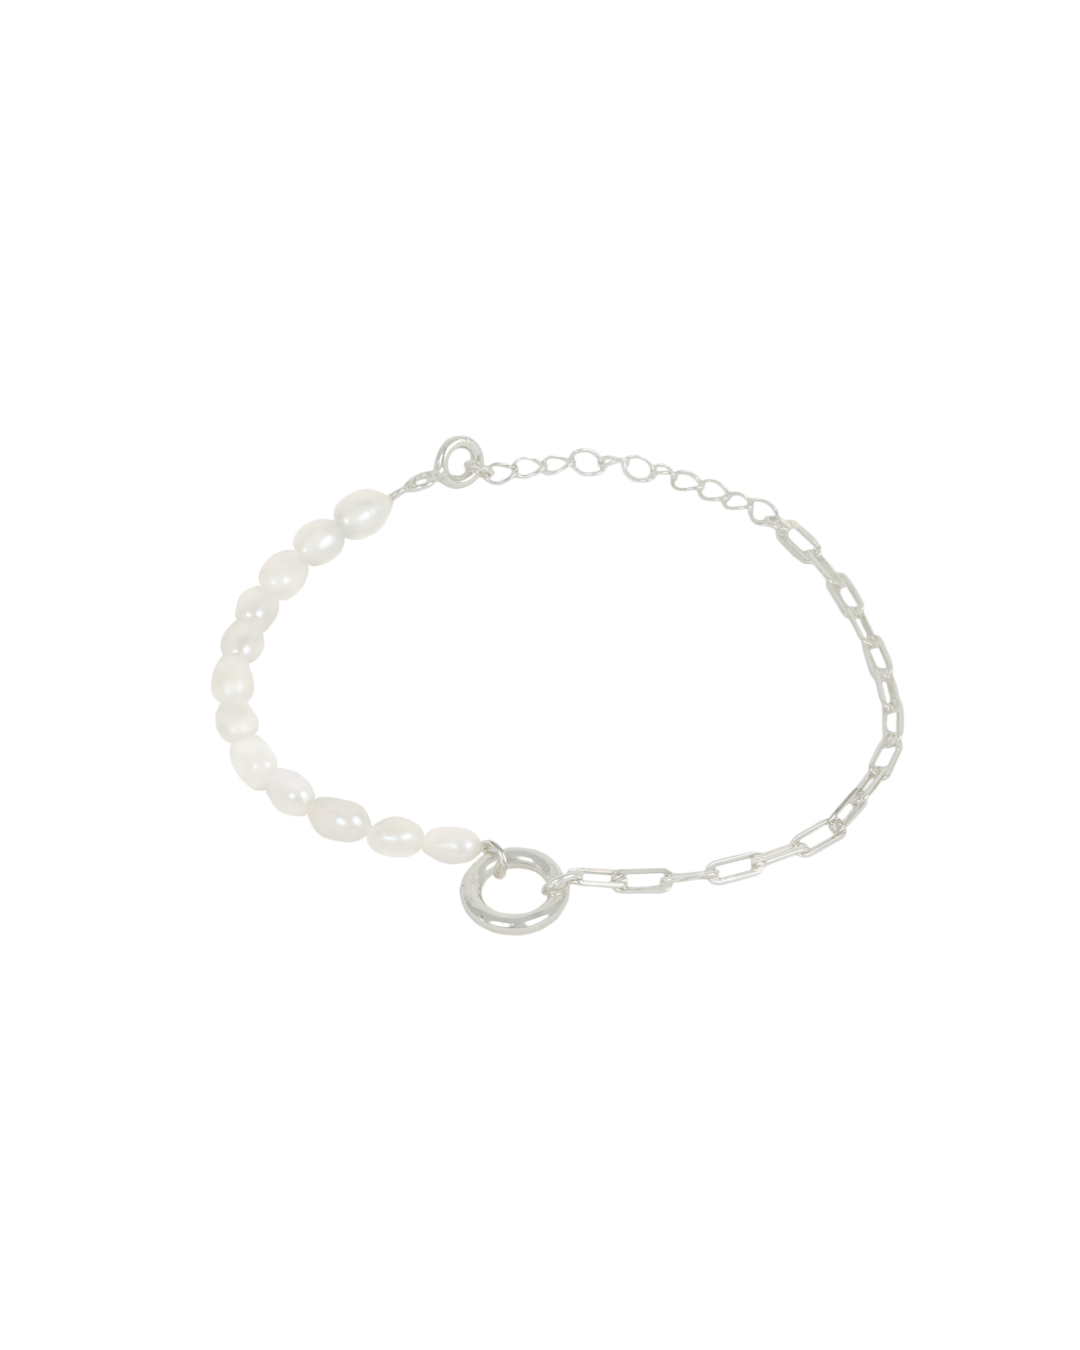 Romantic Link, pearls bracelet, sterling silver